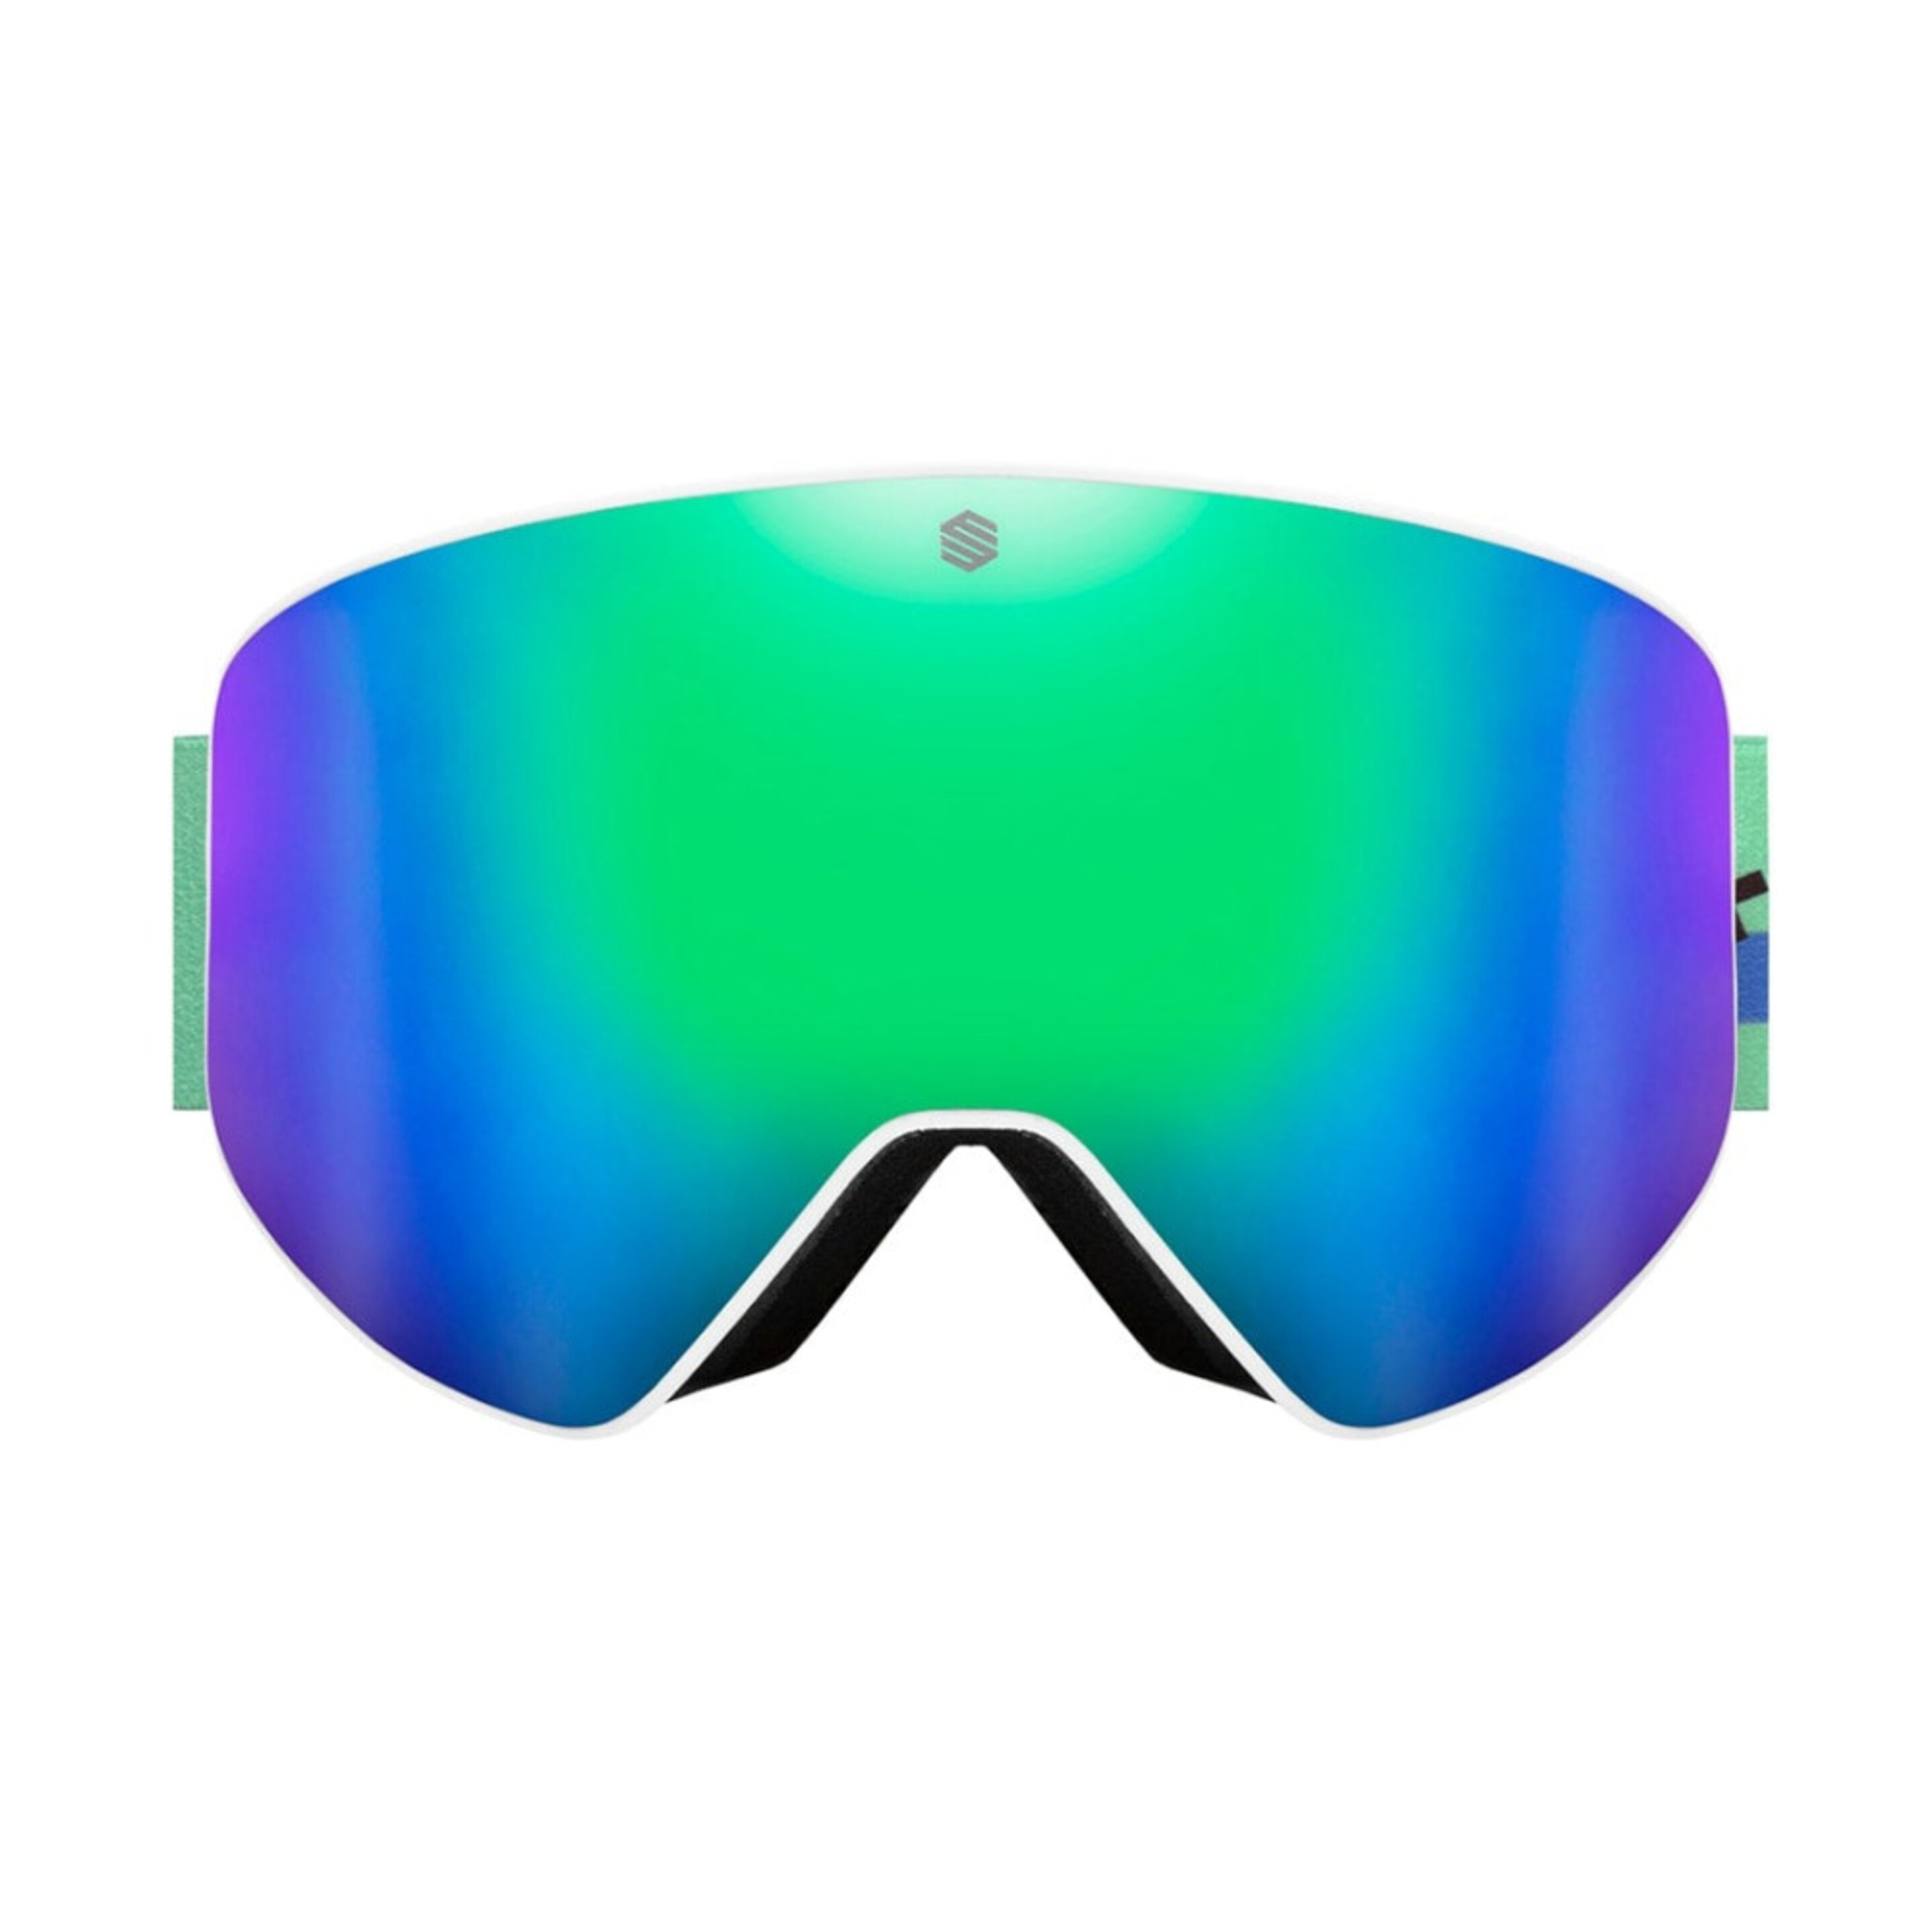 Gafas De Sol Para Esquí/snow Siroko Gx Cypress